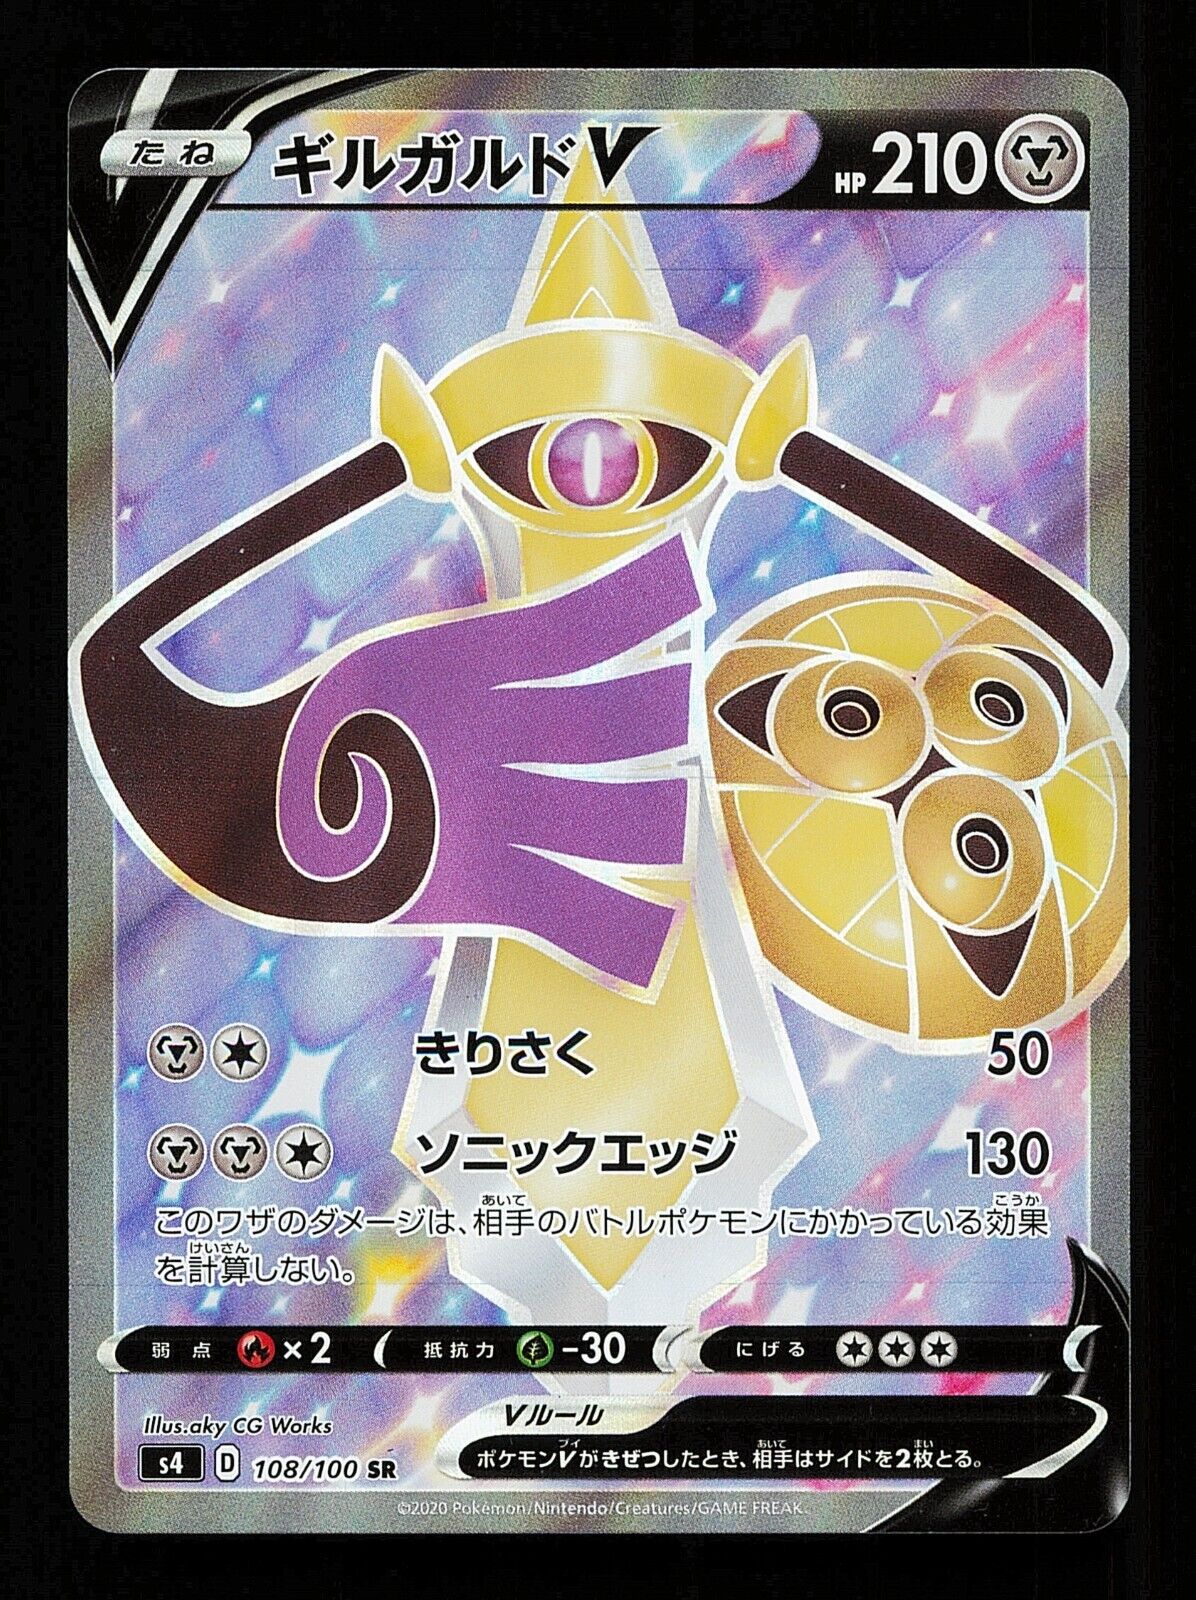 Aegislash V 108/100 - Astonishing Volt Tackle - Japanese Secret Rare Pokemon NM